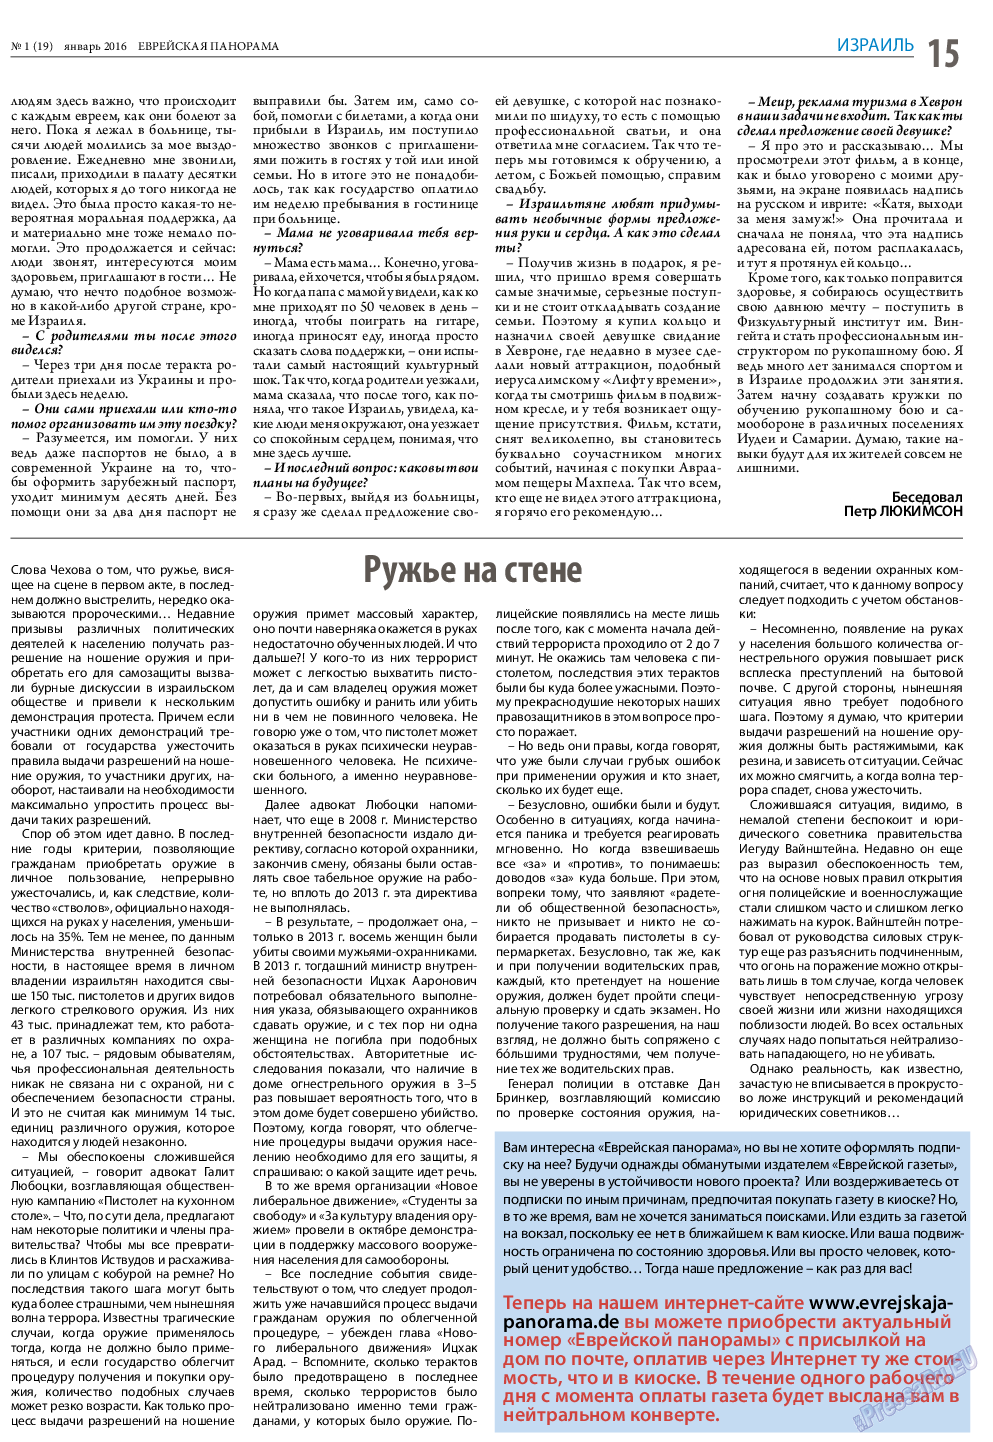 Еврейская панорама, газета. 2016 №1 стр.15